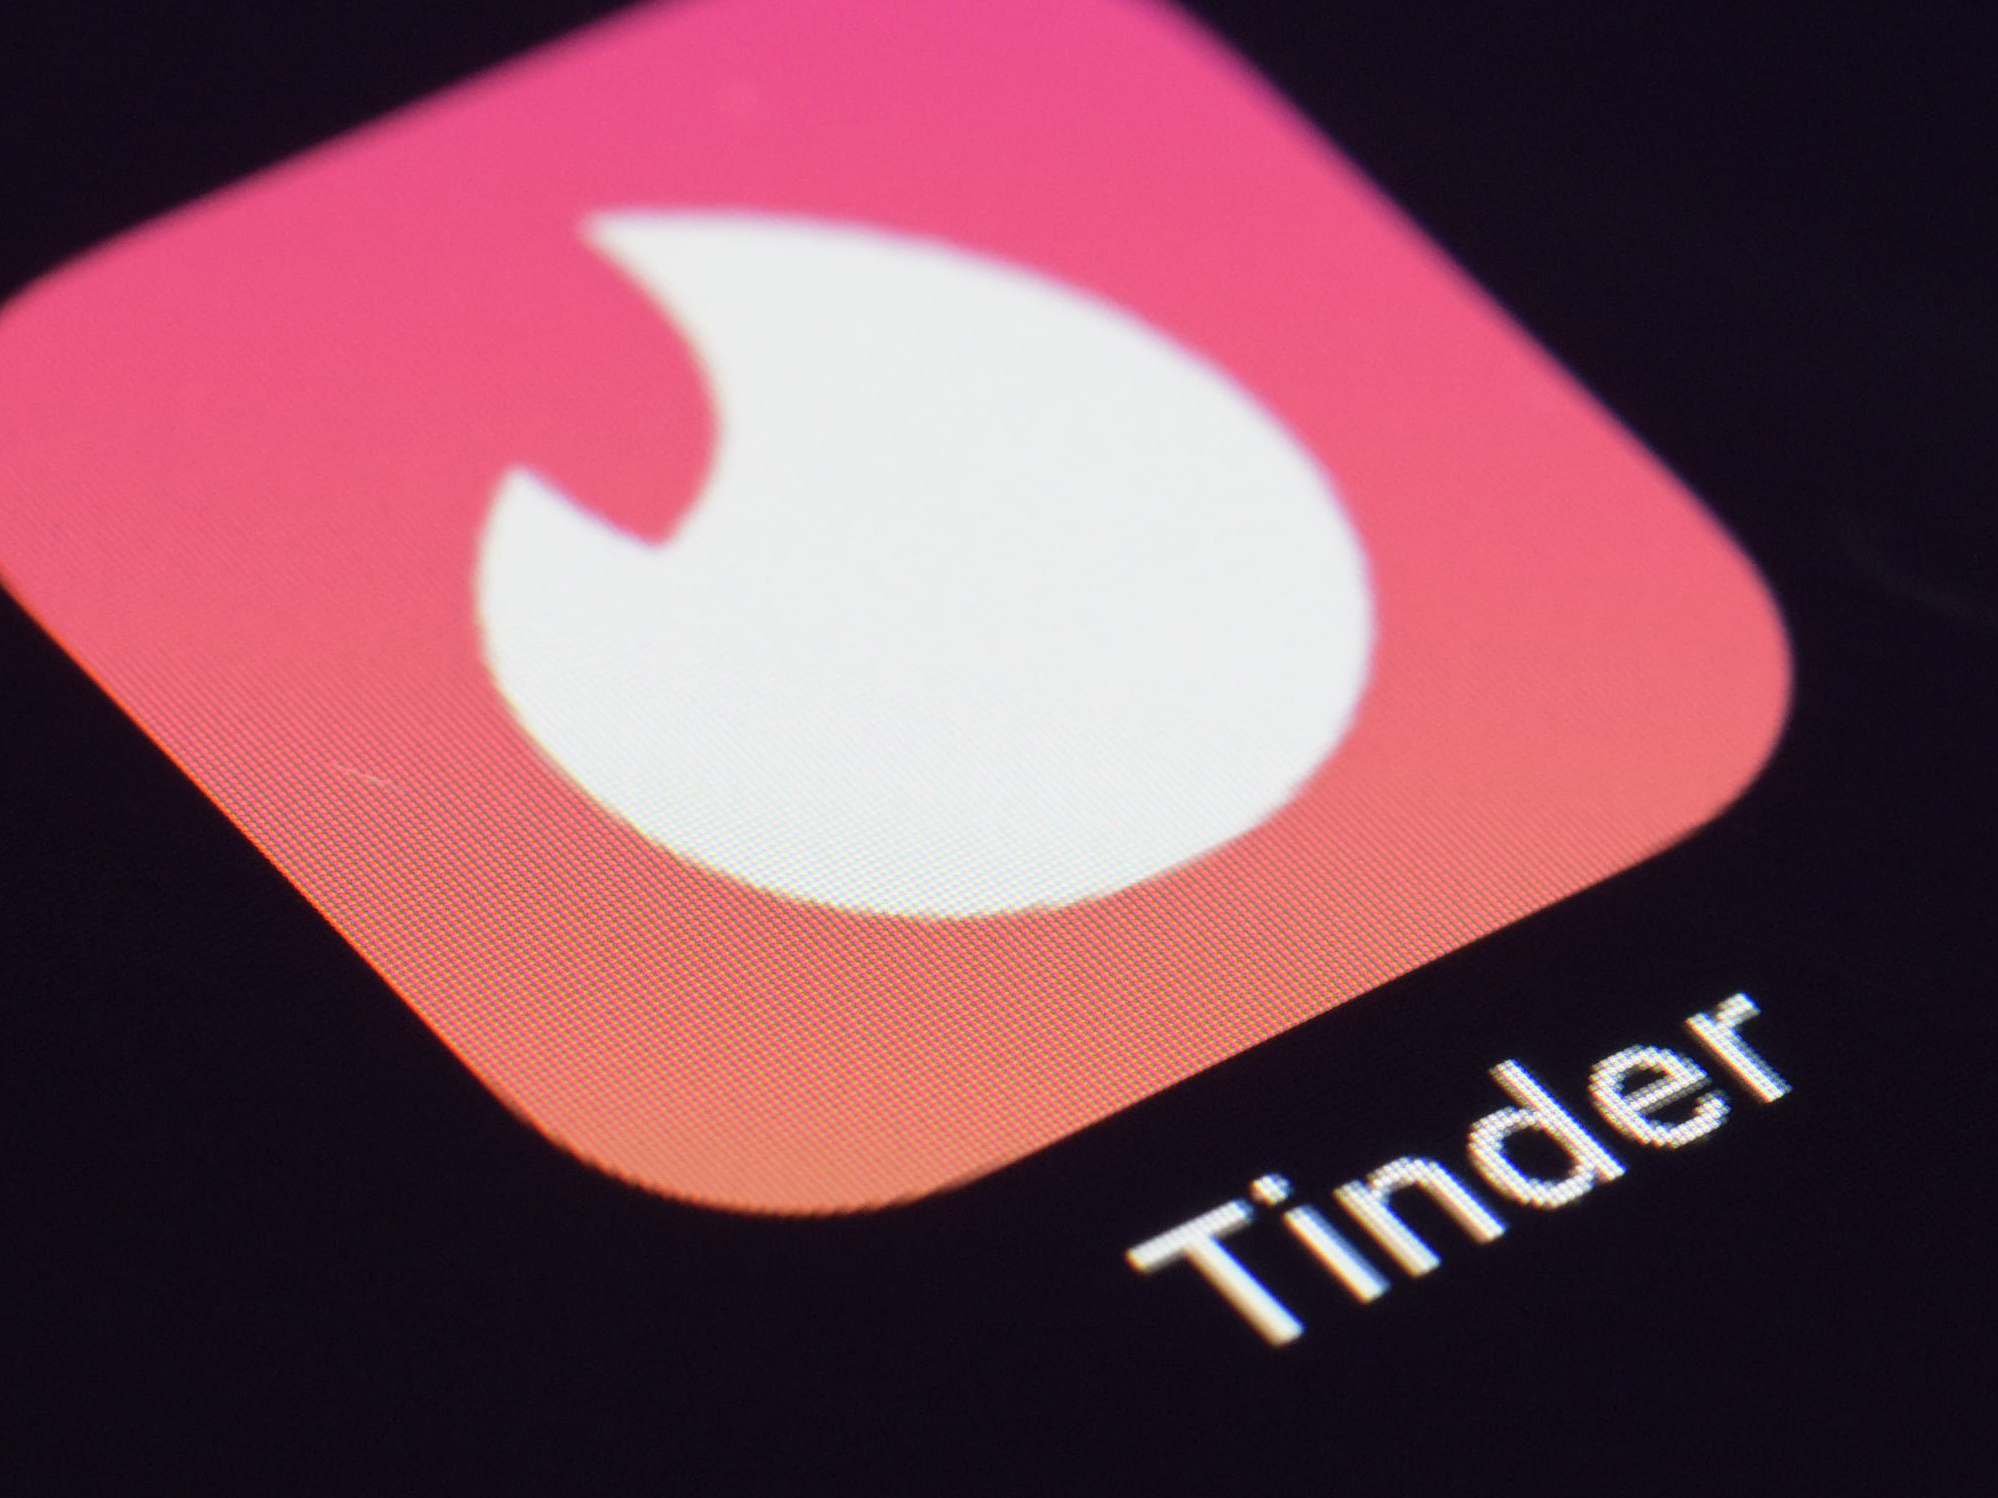 Maker of Tinder, Hinge sued over ‘addictive’ dating apps that put profits over love